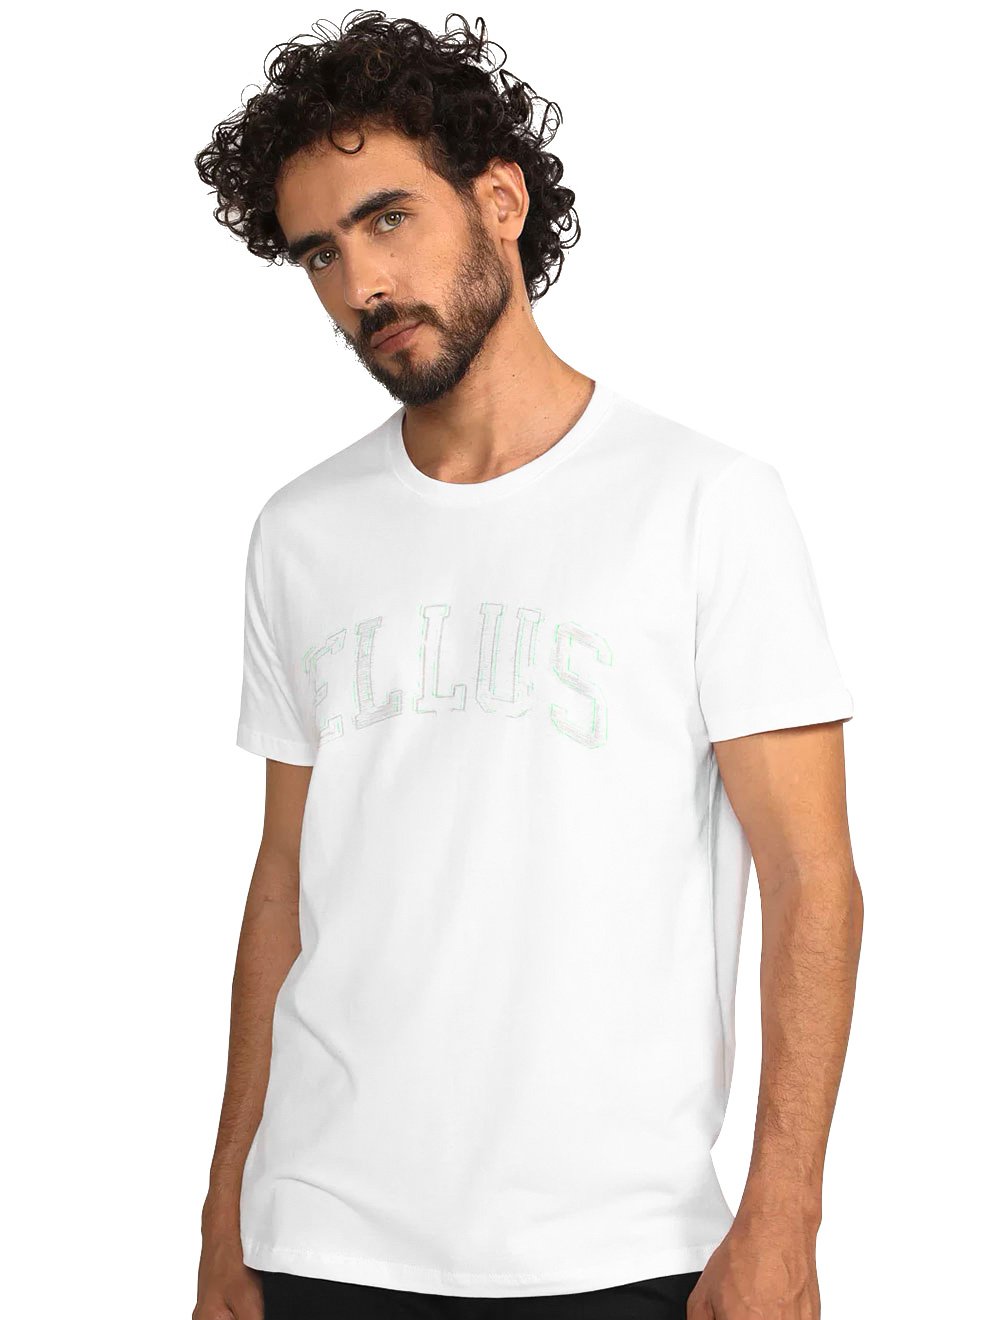 Camiseta Ellus Masculina Fine Embroidery Classic Branca